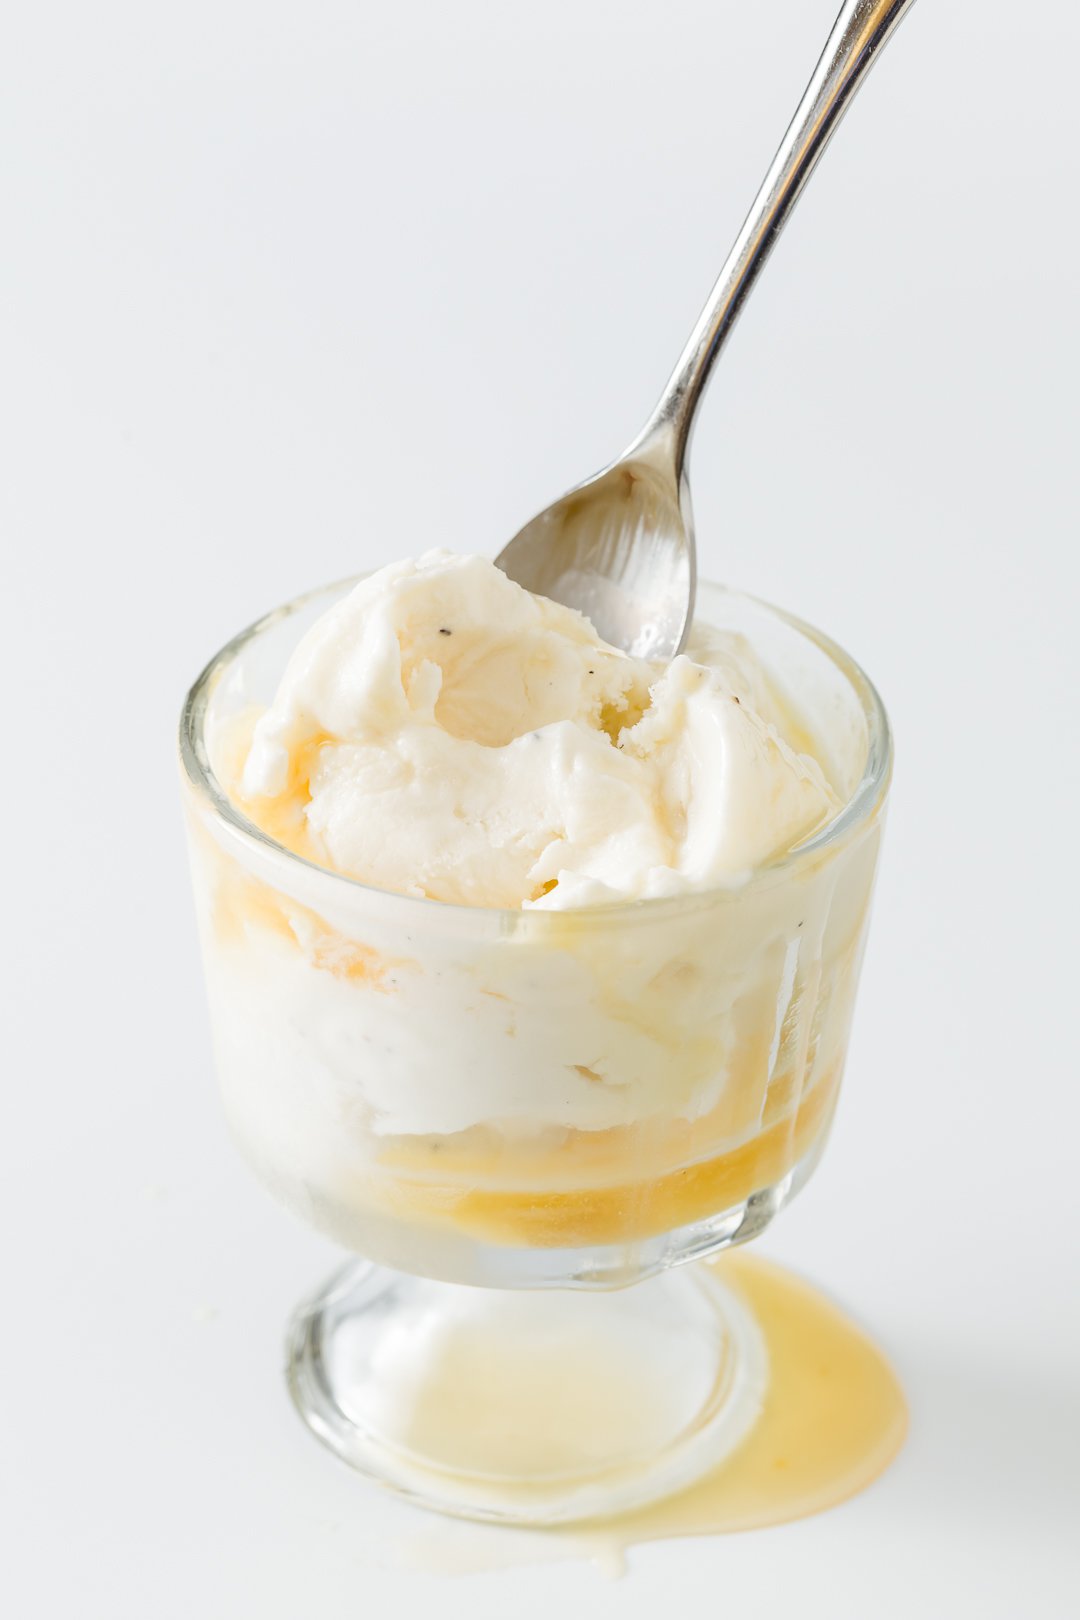 Orange sauce over ice cream with a spoon